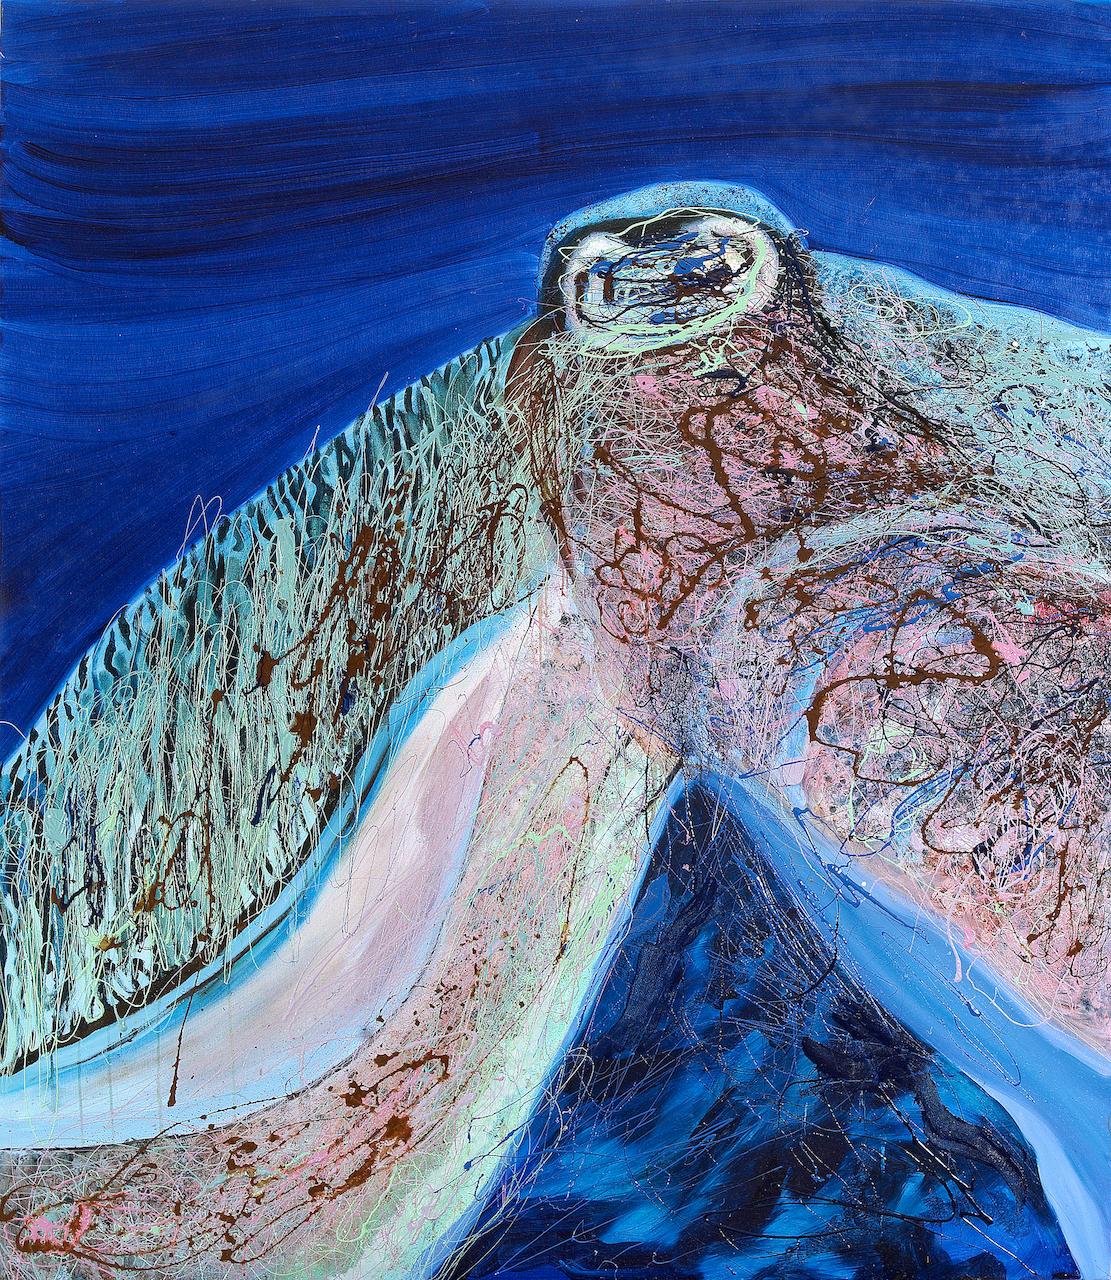 Art contemporain grec par Peny Manavi - Under the Sea 5